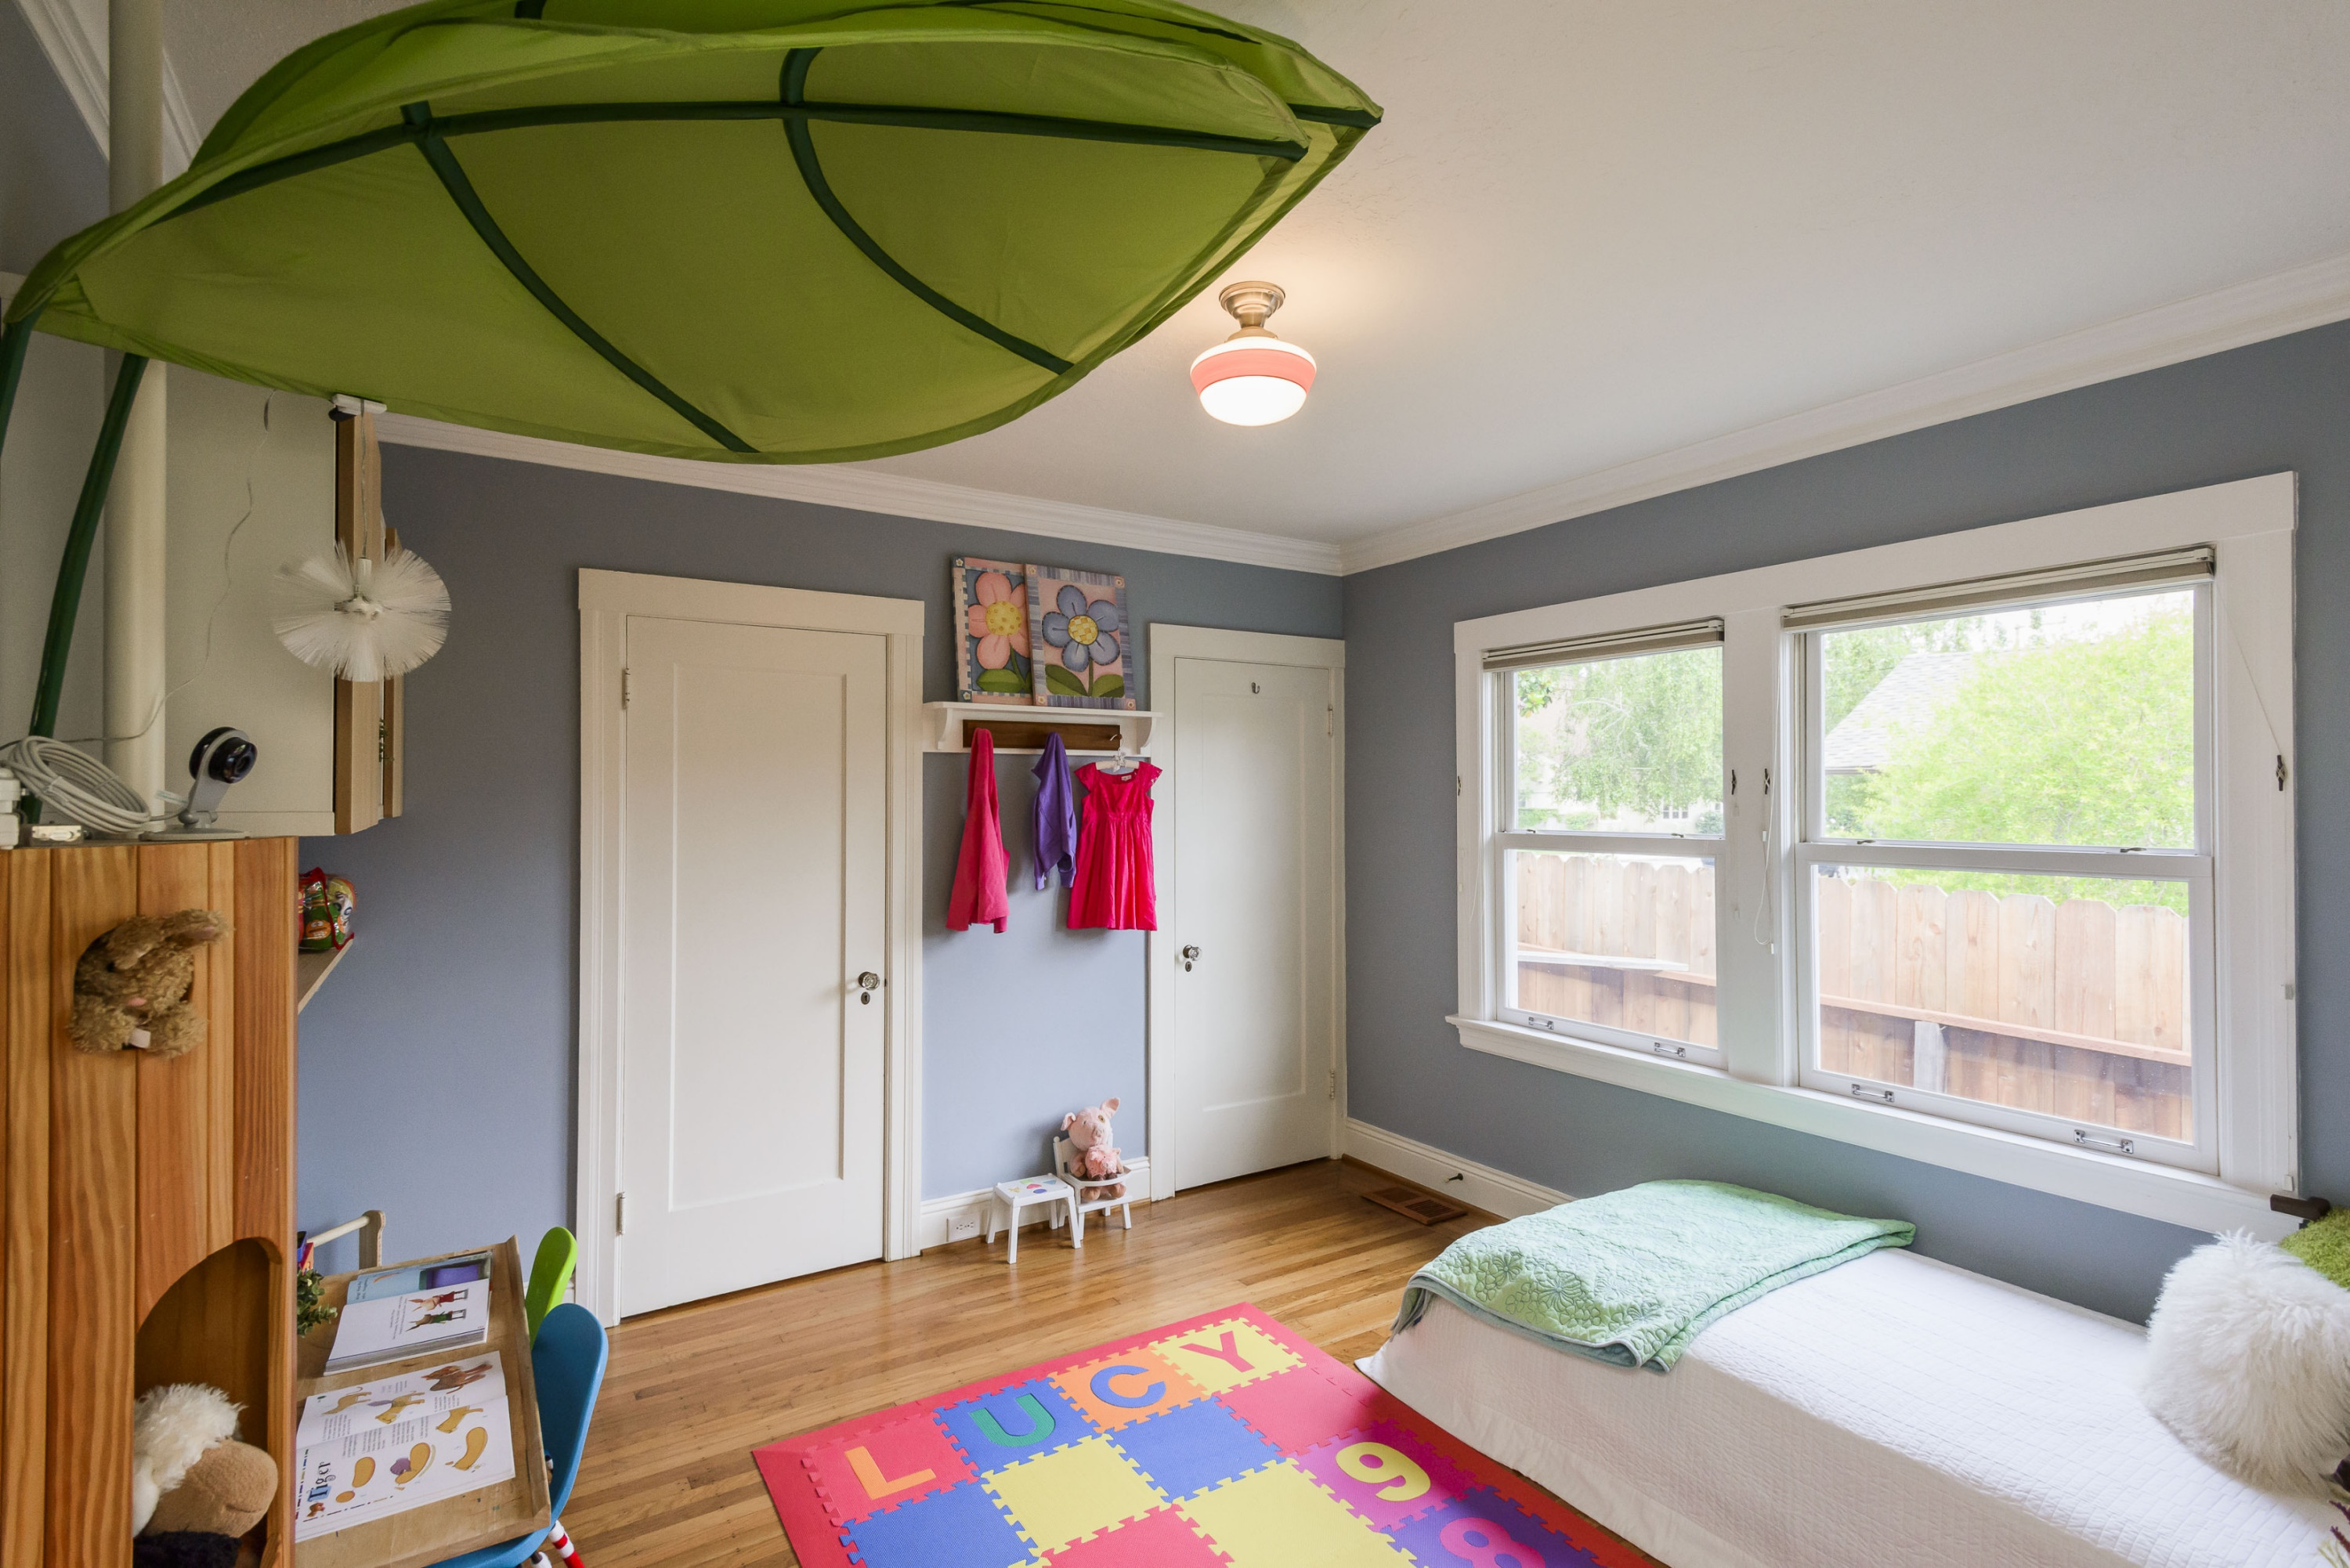 224 Channing Road Bedroom Study in Lyon Hoag Neighborhood in Burlingame..